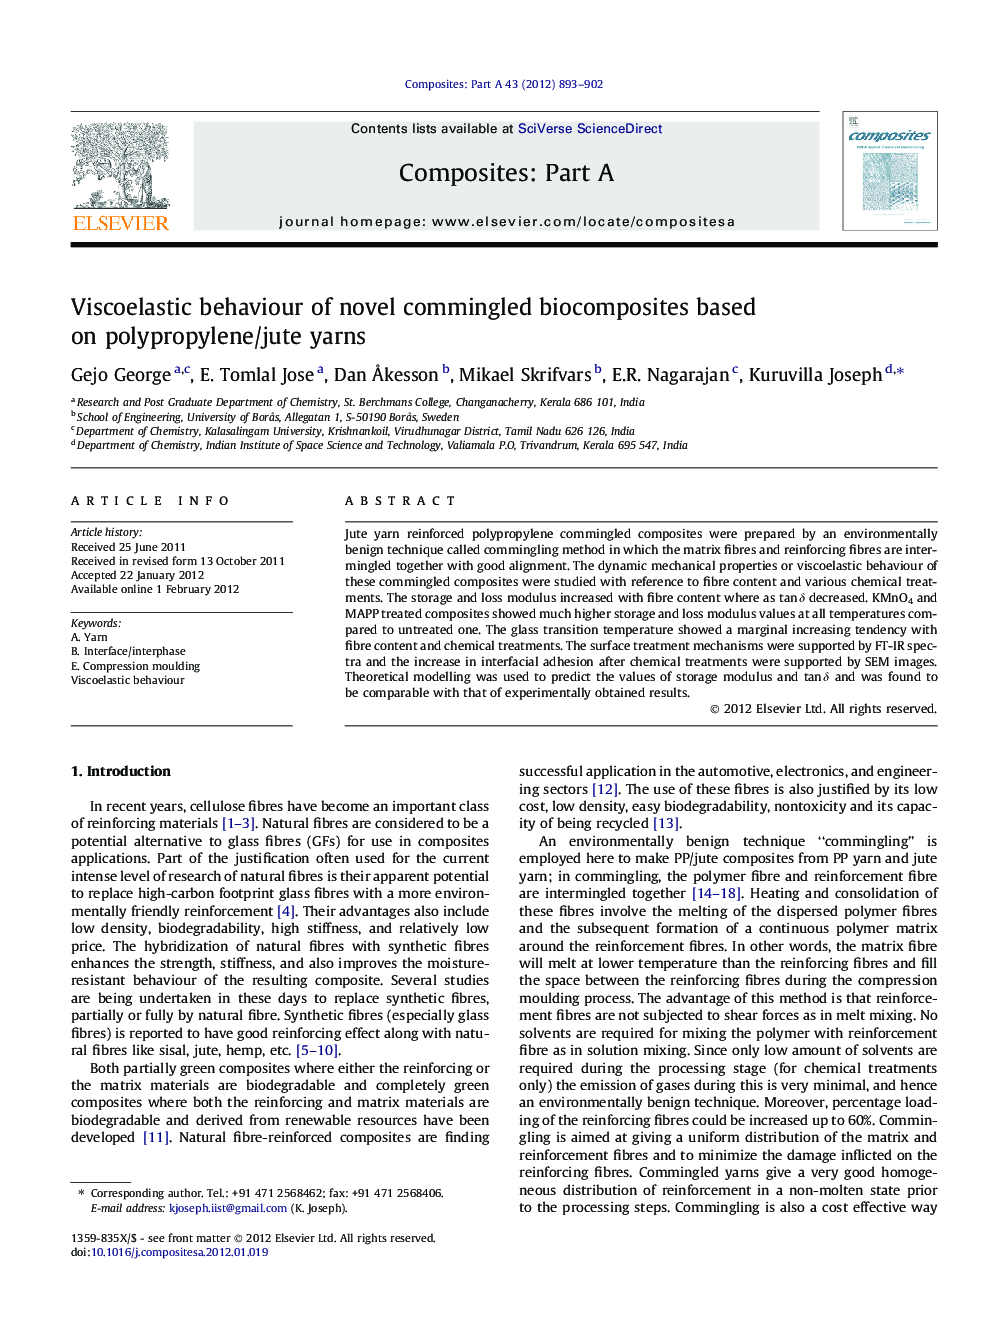 Viscoelastic behaviour of novel commingled biocomposites based on polypropylene/jute yarns